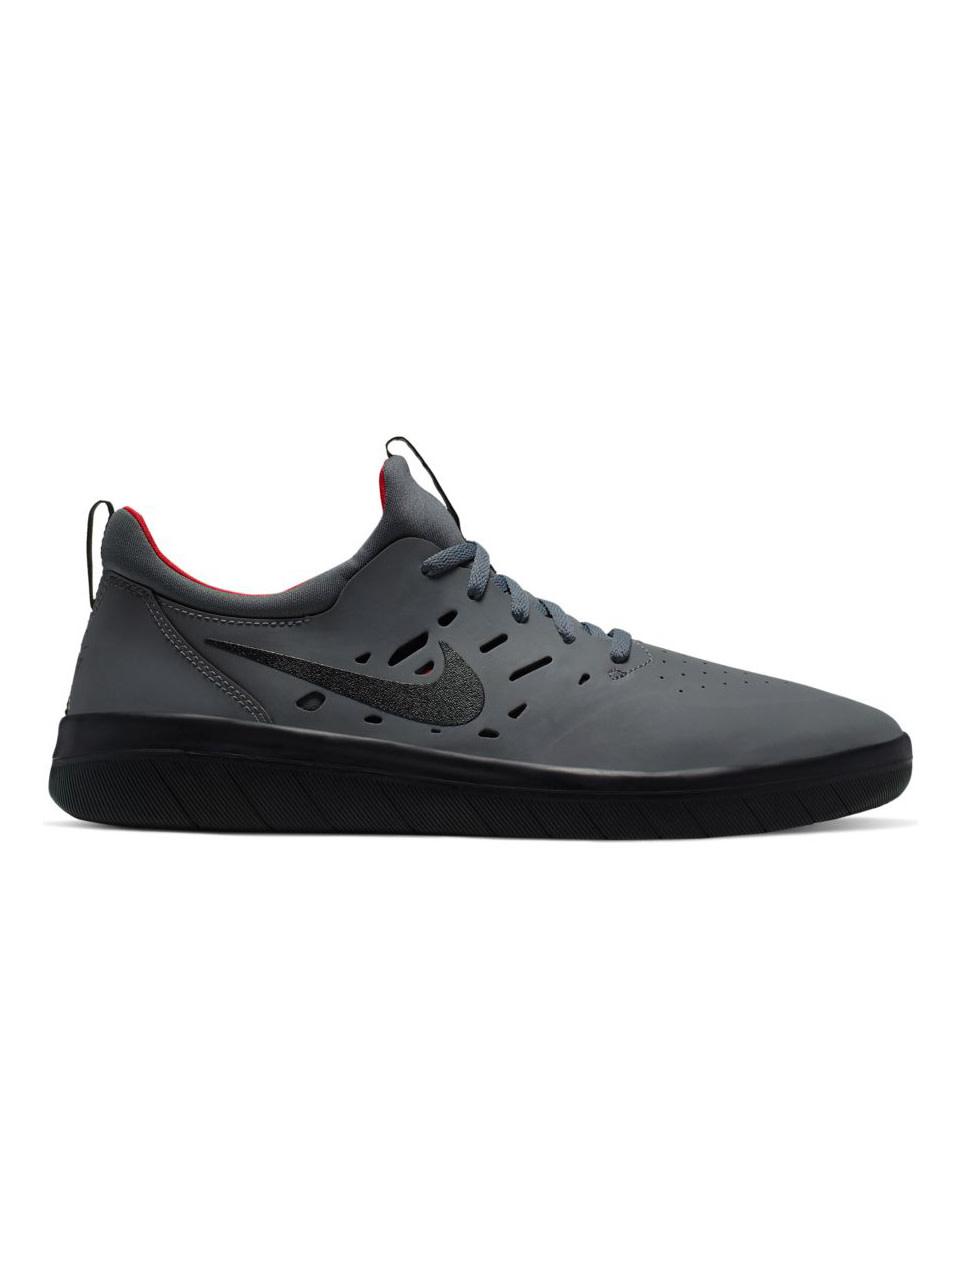 Nike SB Nyjah Free - Dark Grey/Black 